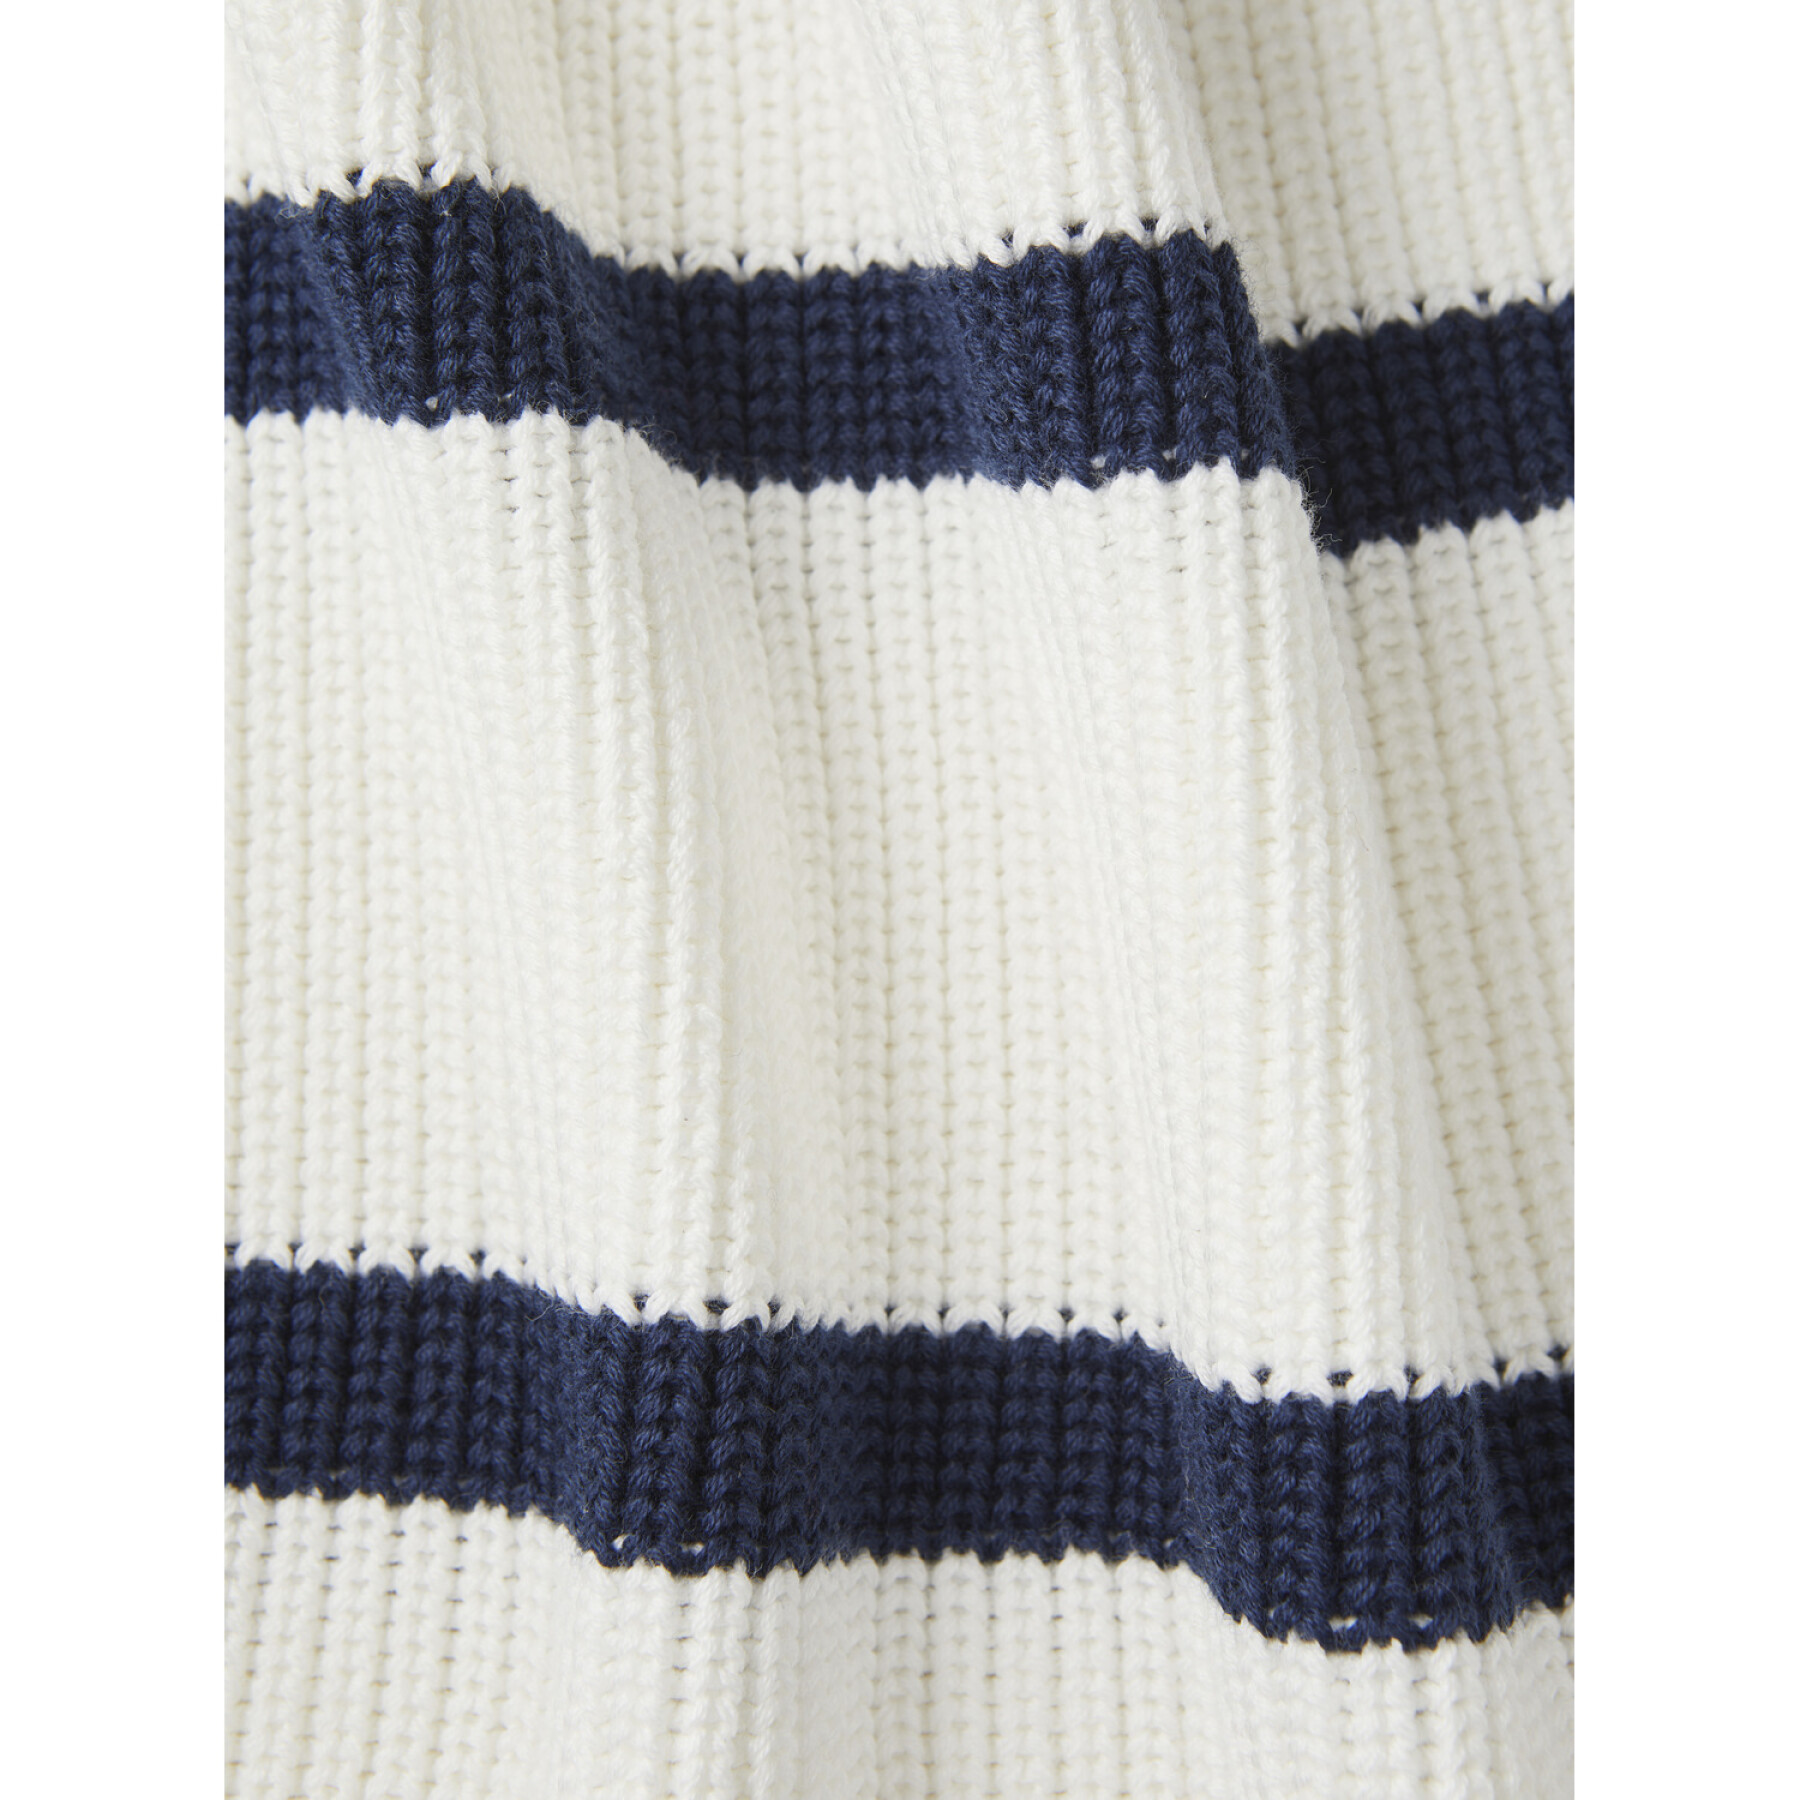 Women's twisted stripes round-neck sweatshirt Jack & Jones Mila